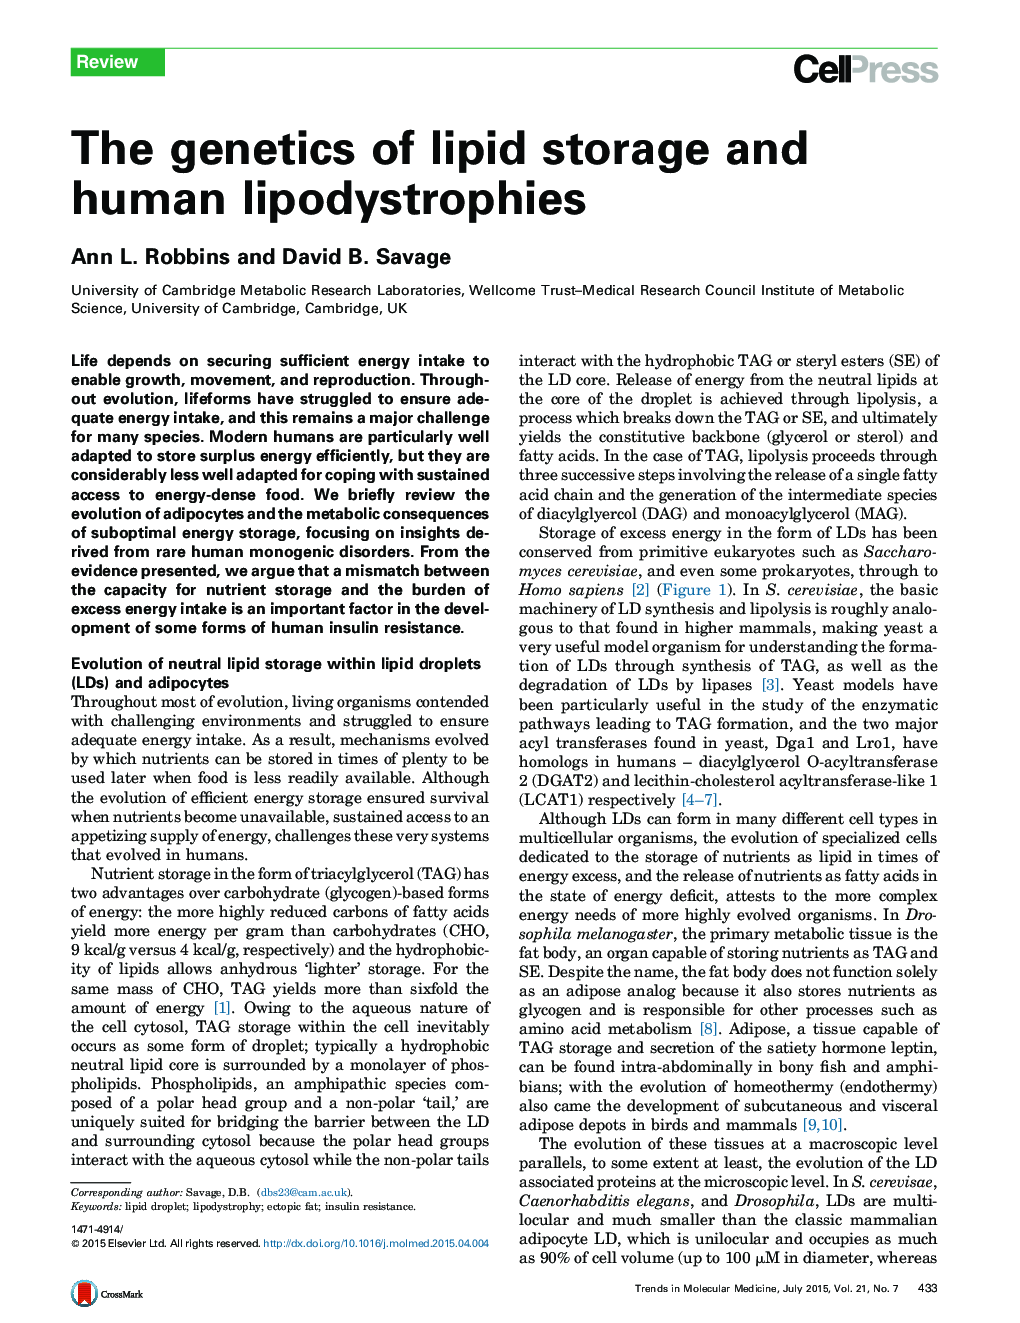 The genetics of lipid storage and human lipodystrophies